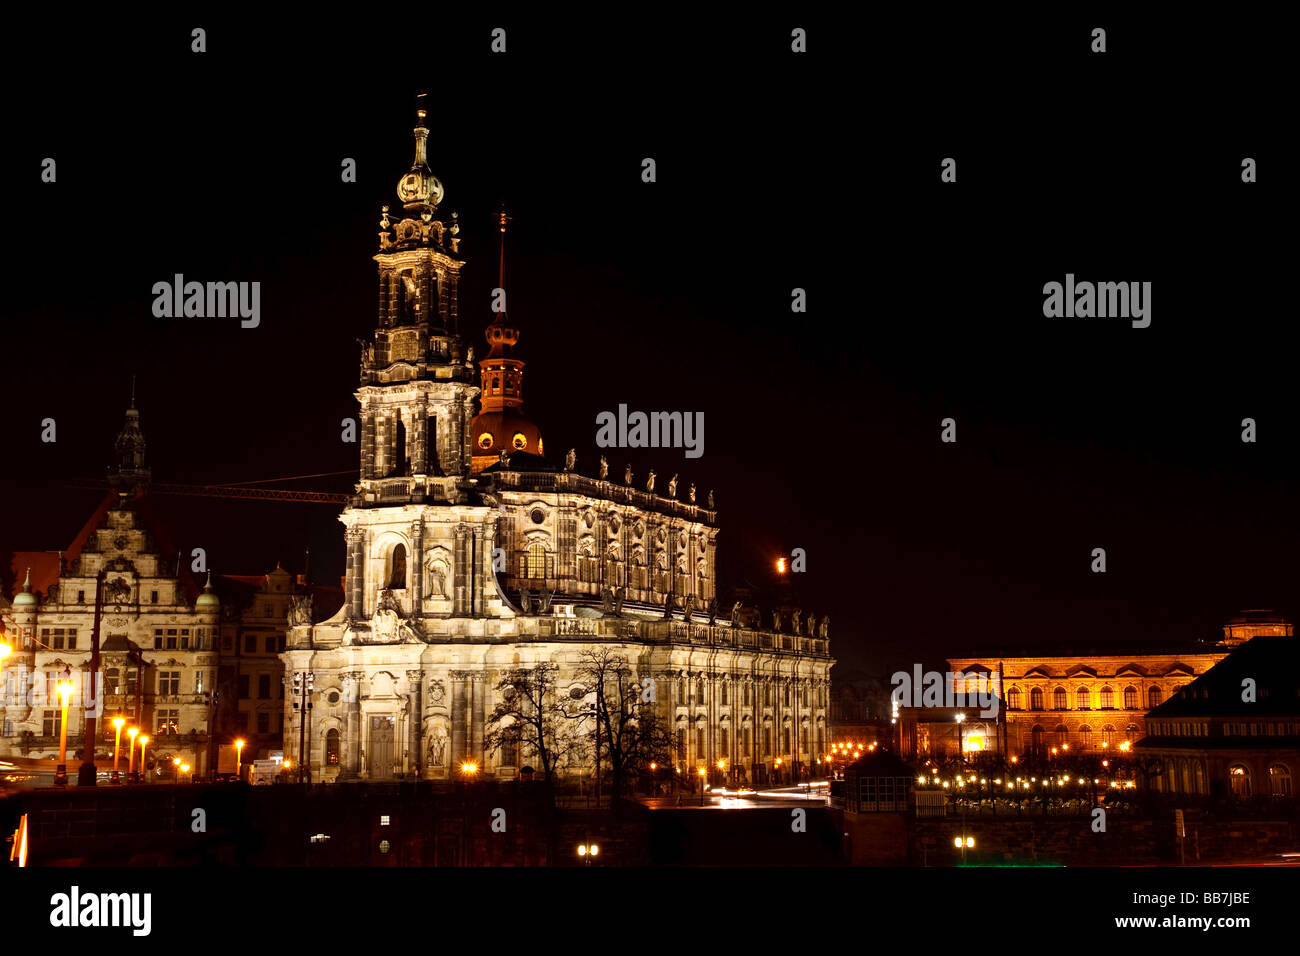 Katholische Hofkirche, Catholic Court Church at night, Dresden, Saxony, Germany, Europe Stock Photo